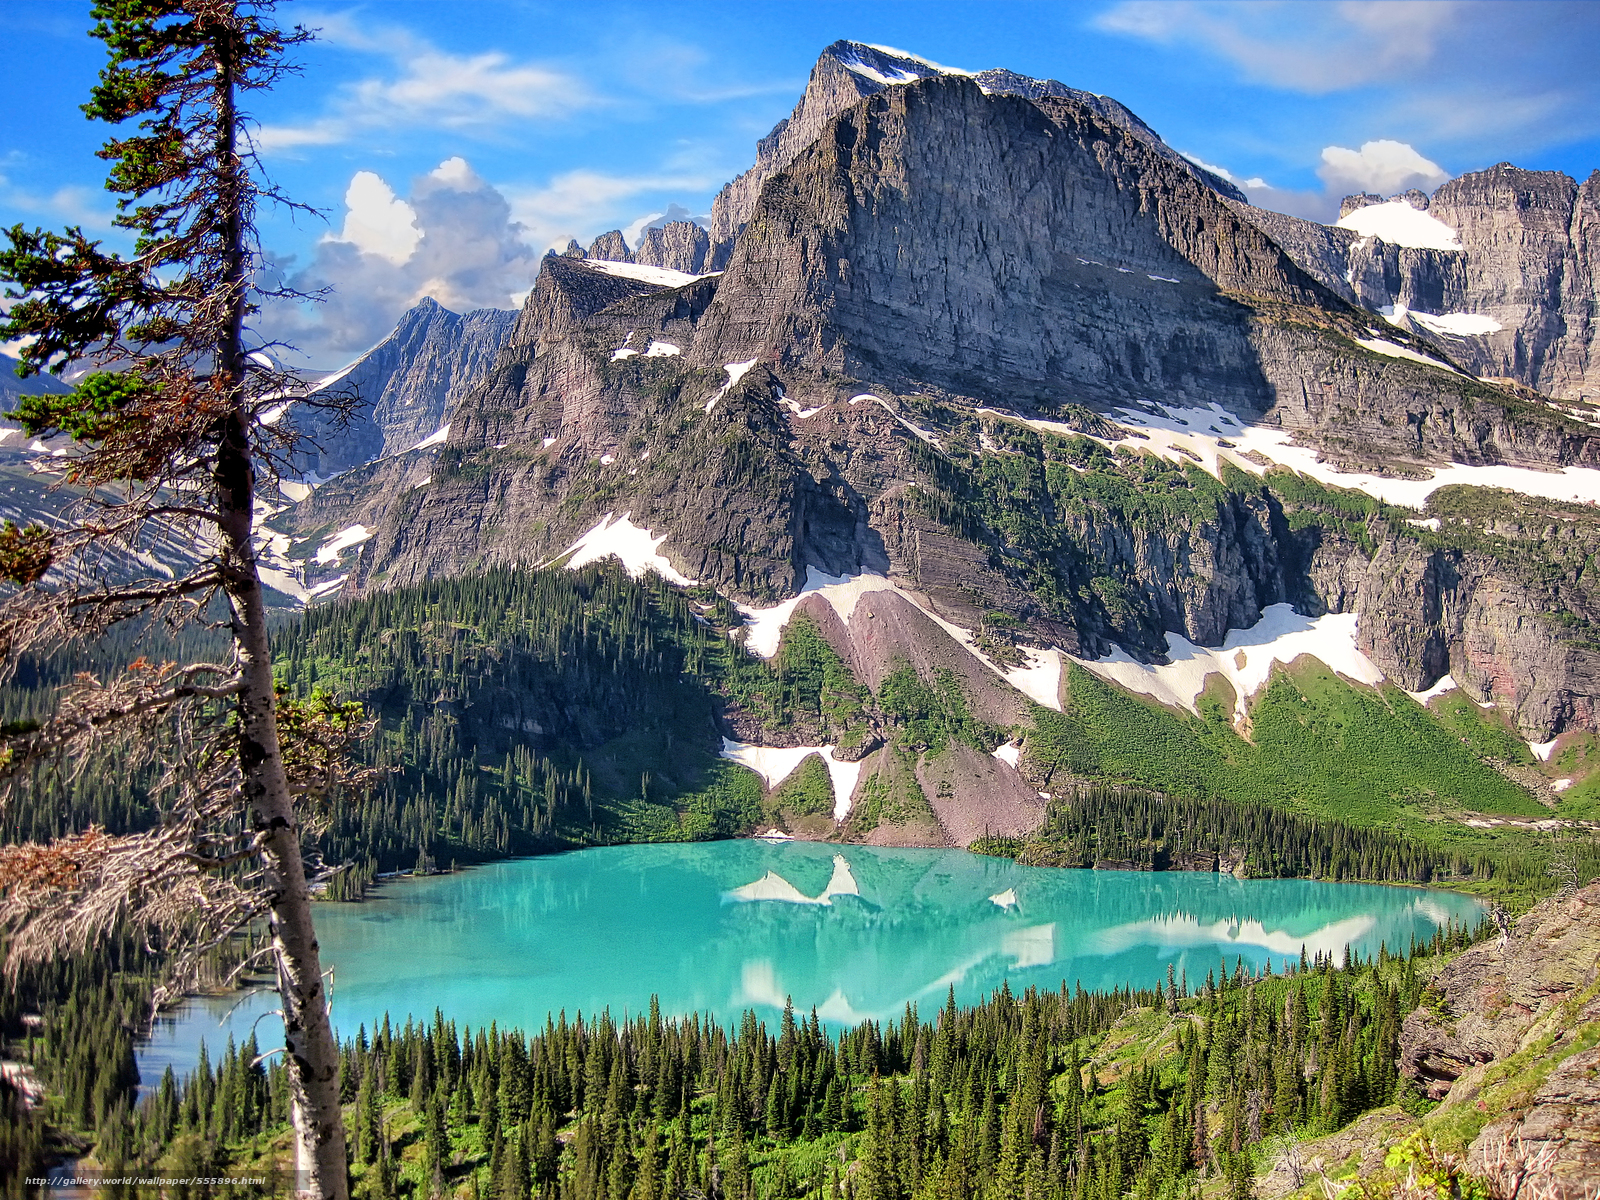 Download wallpaper Glacier National Park Mountains lake landscape 1600x1200